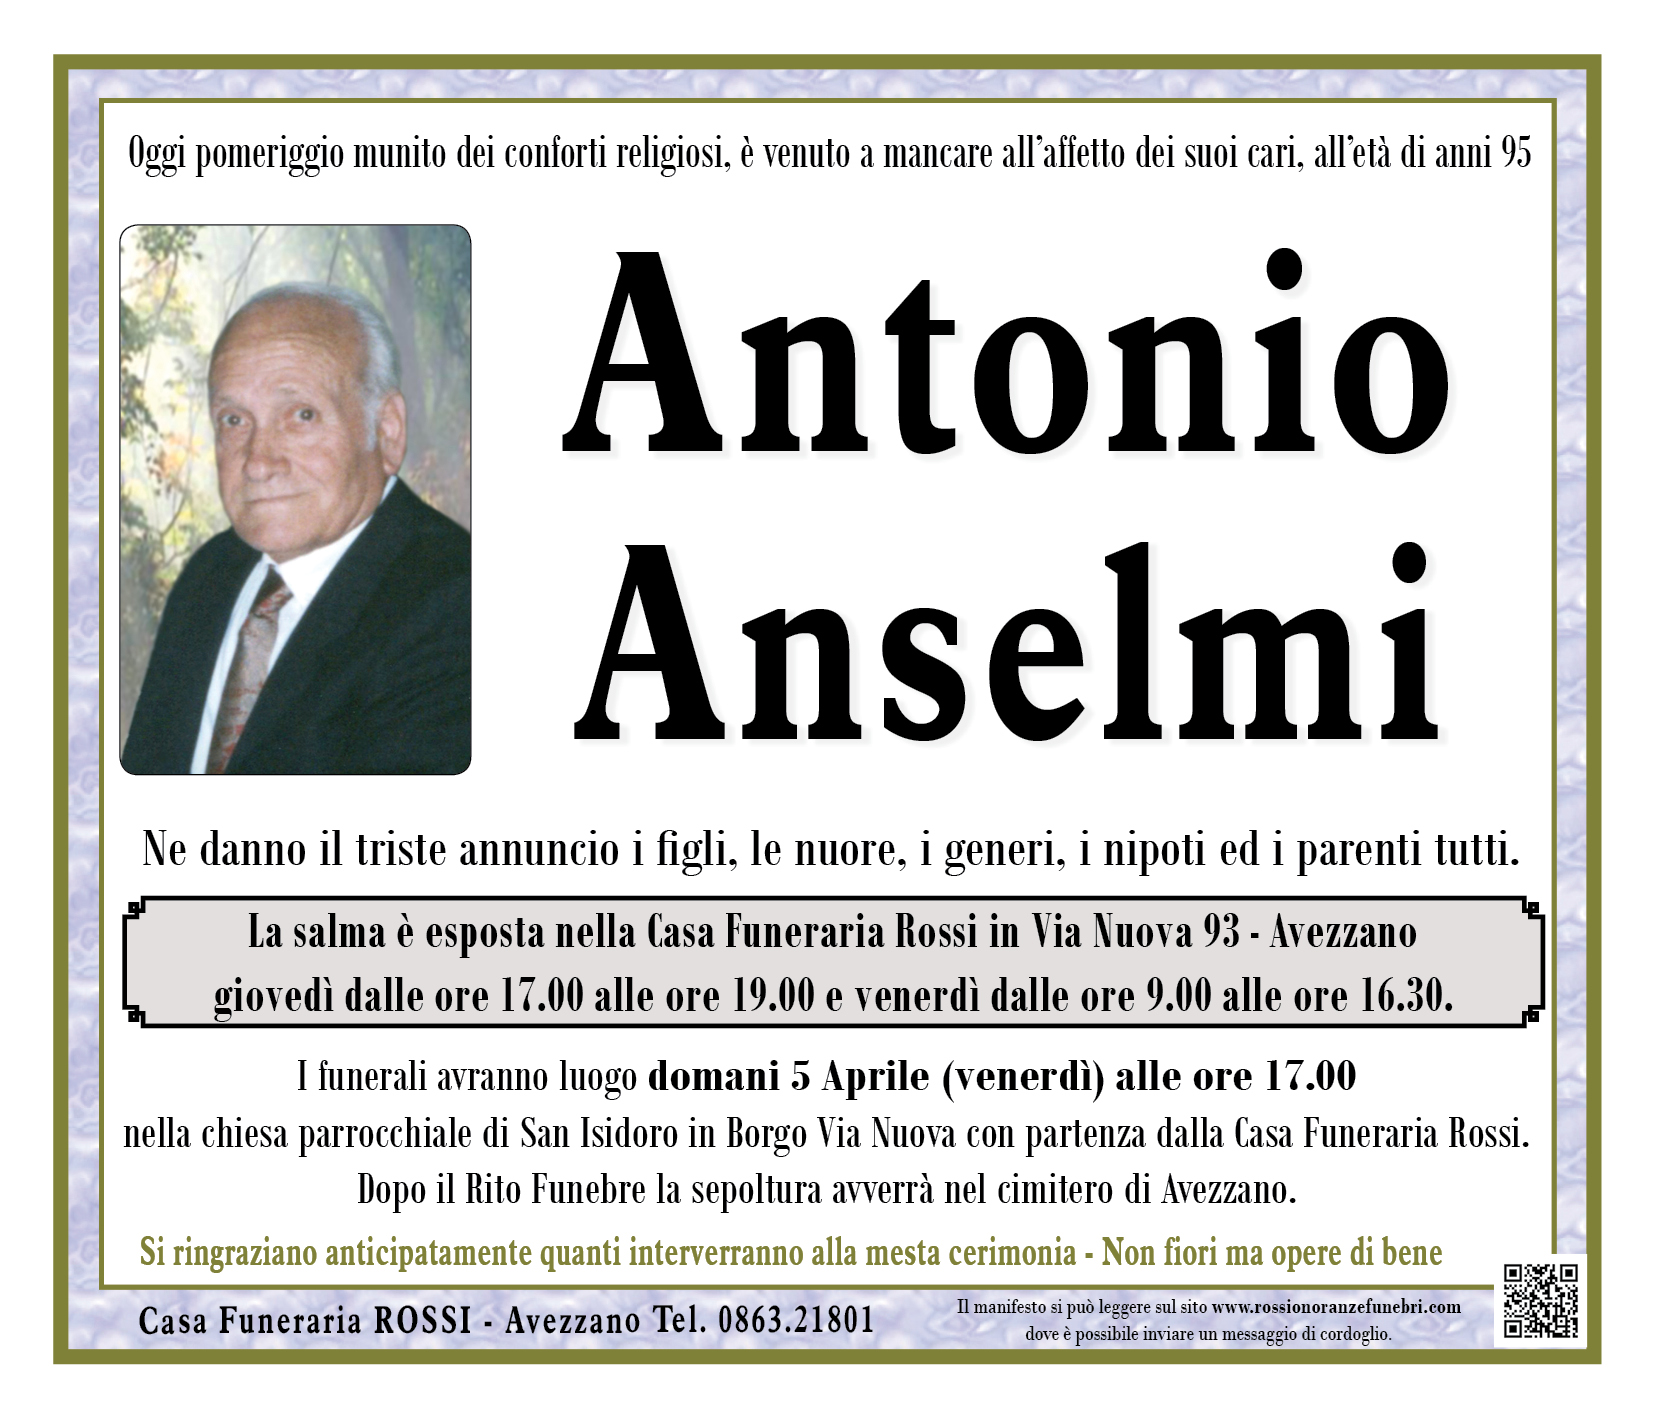 Antonio Anselmi